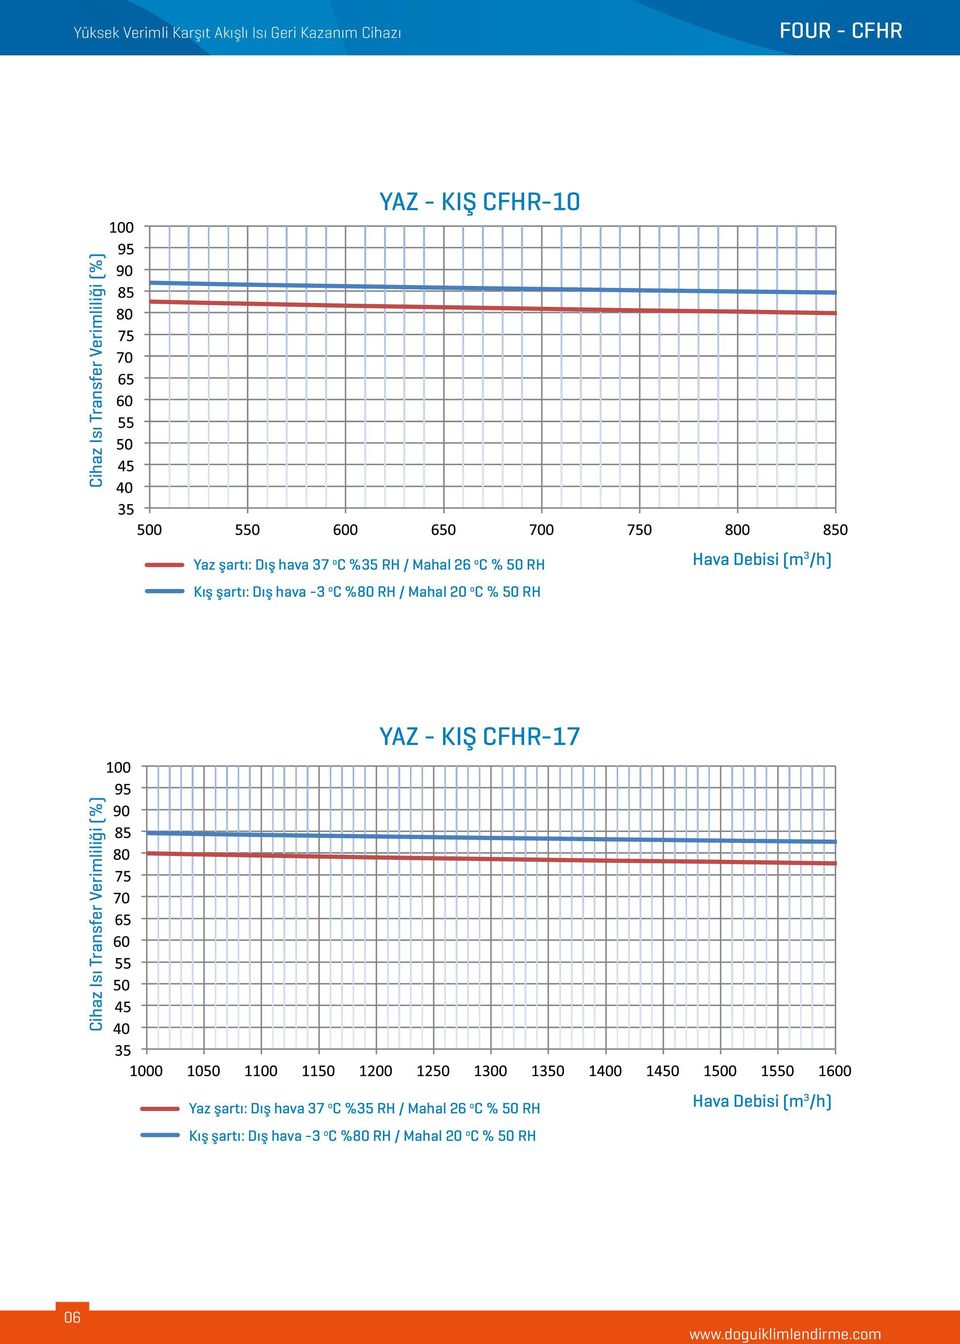 YAZ - KIŞ CFHR-17 Cihaz Isı Transfer Verimliliği (%) Cihaz Isı Transfer Verimliliği (%) Yaz şartı: